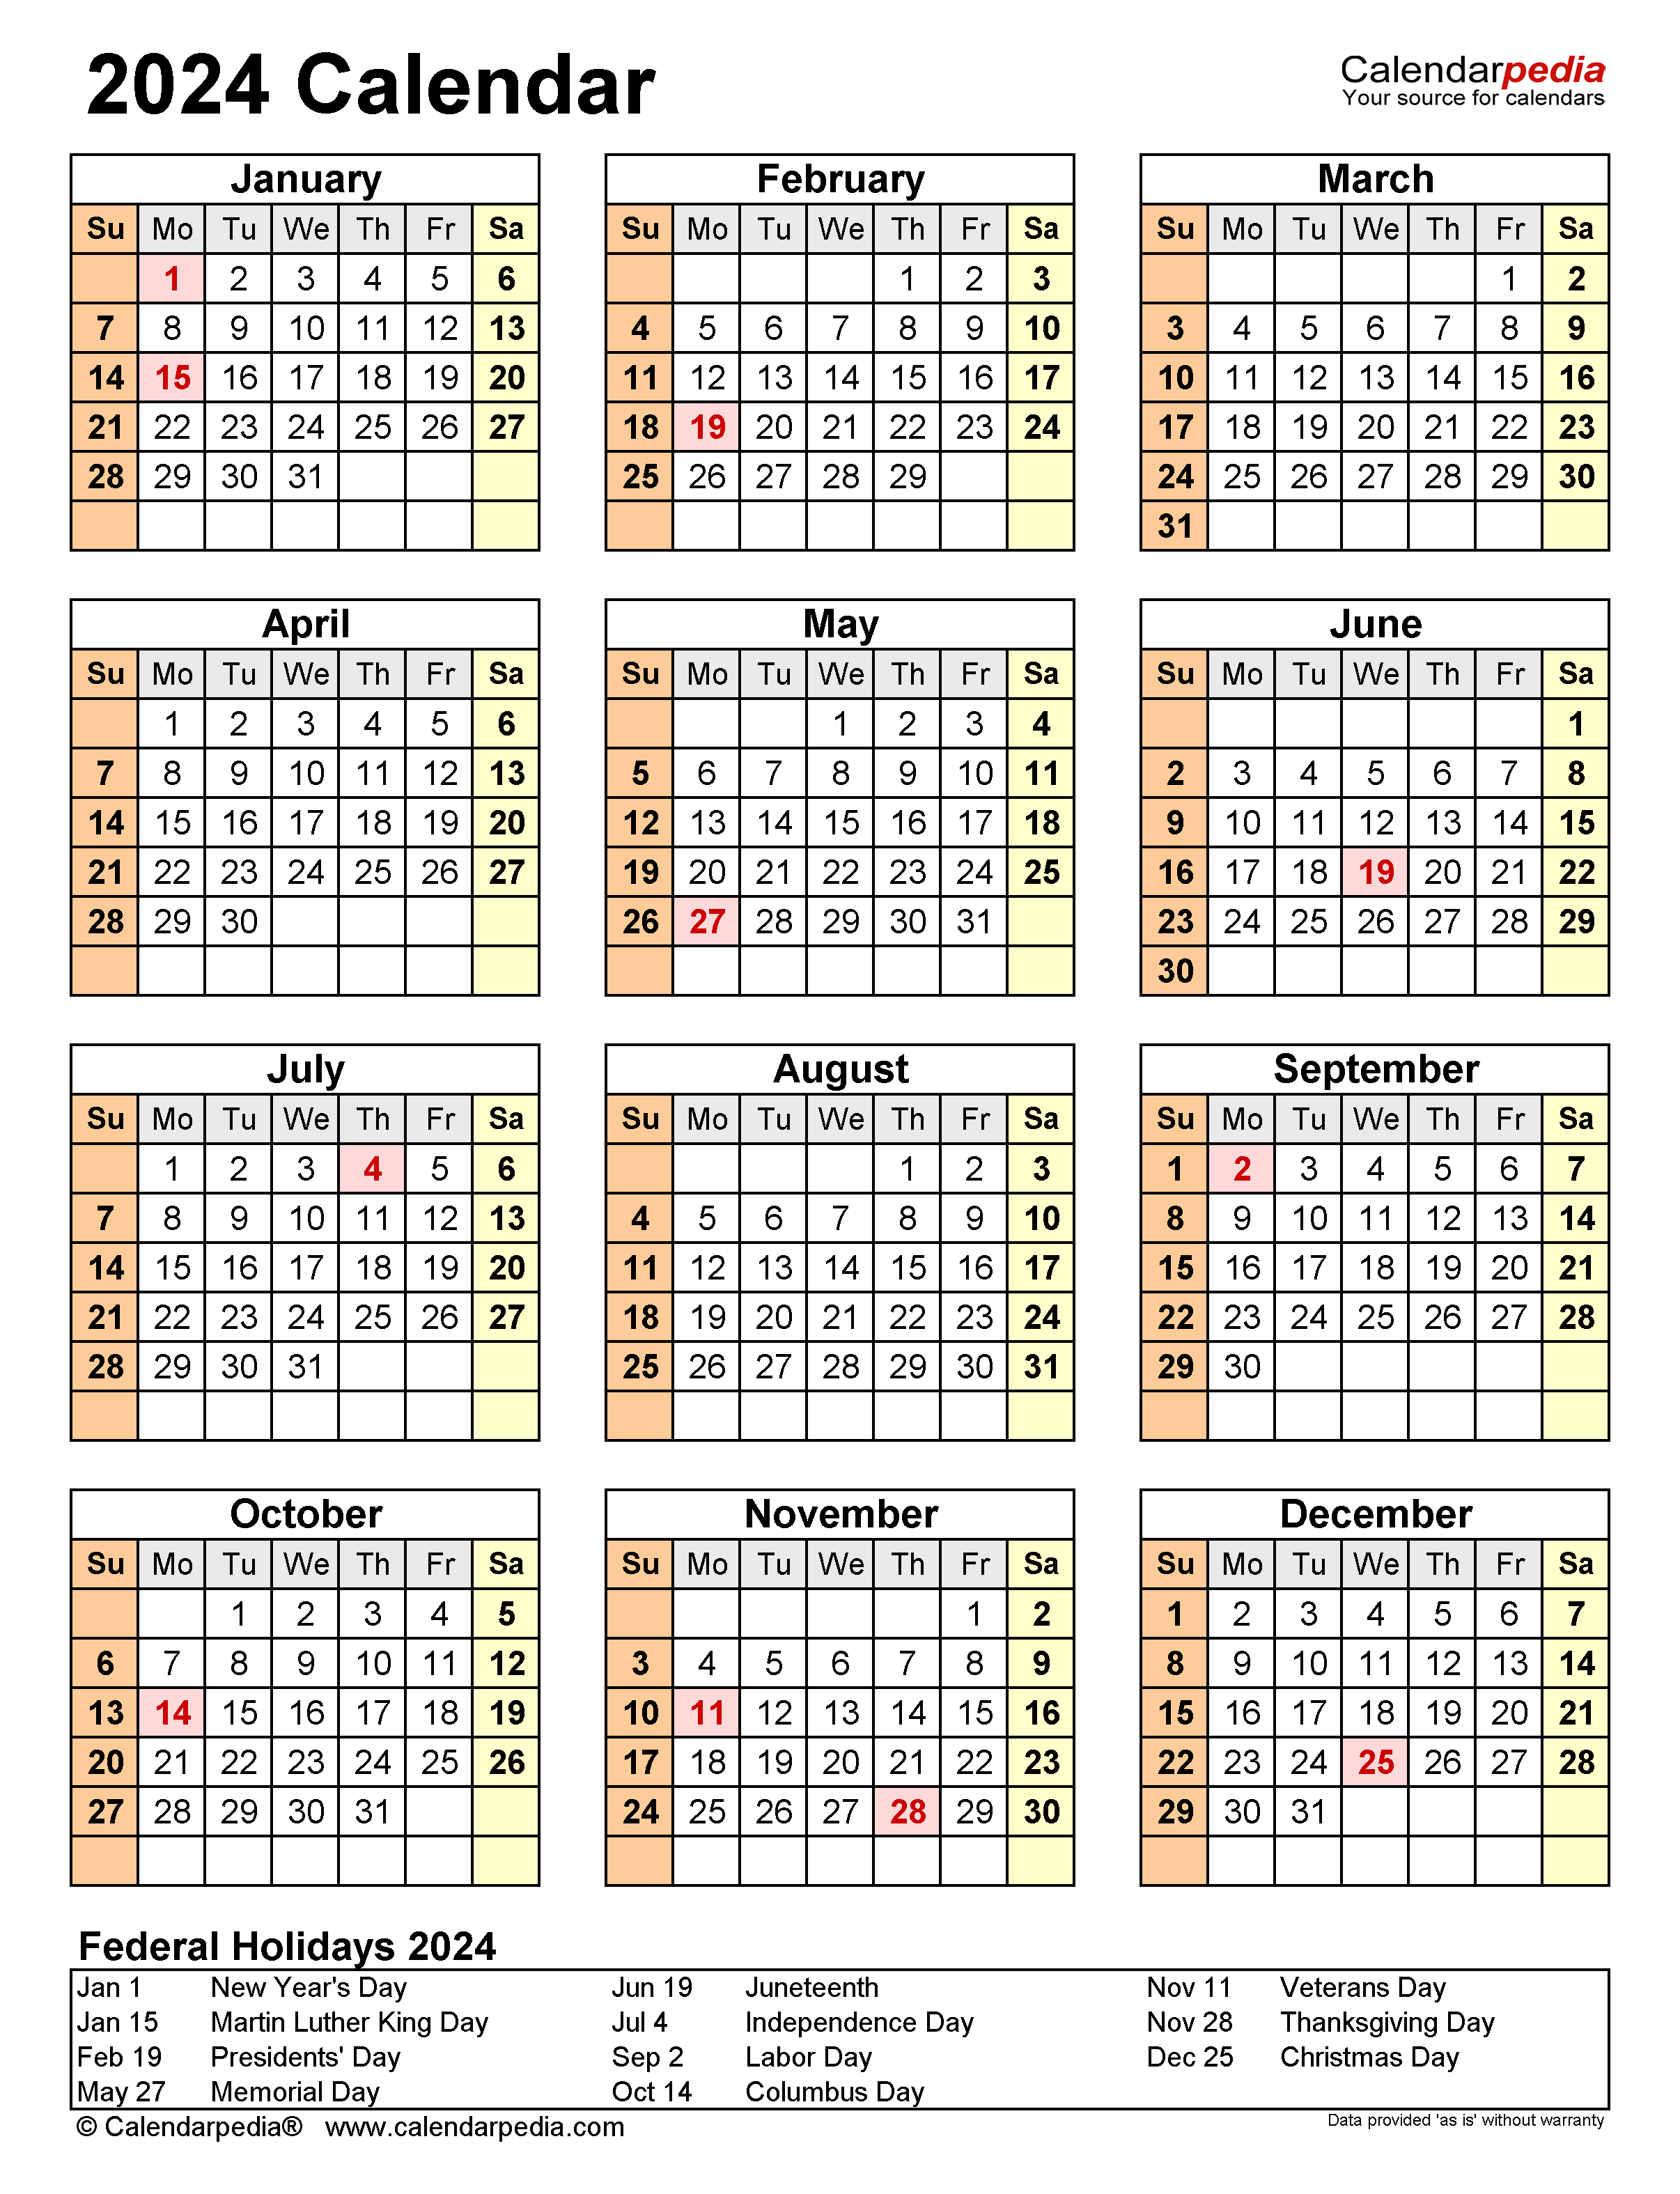 Free Printable 2024 Calendar With Holidays Crownflourmills | Free Printable 2024 Calendar By Month With Holidays